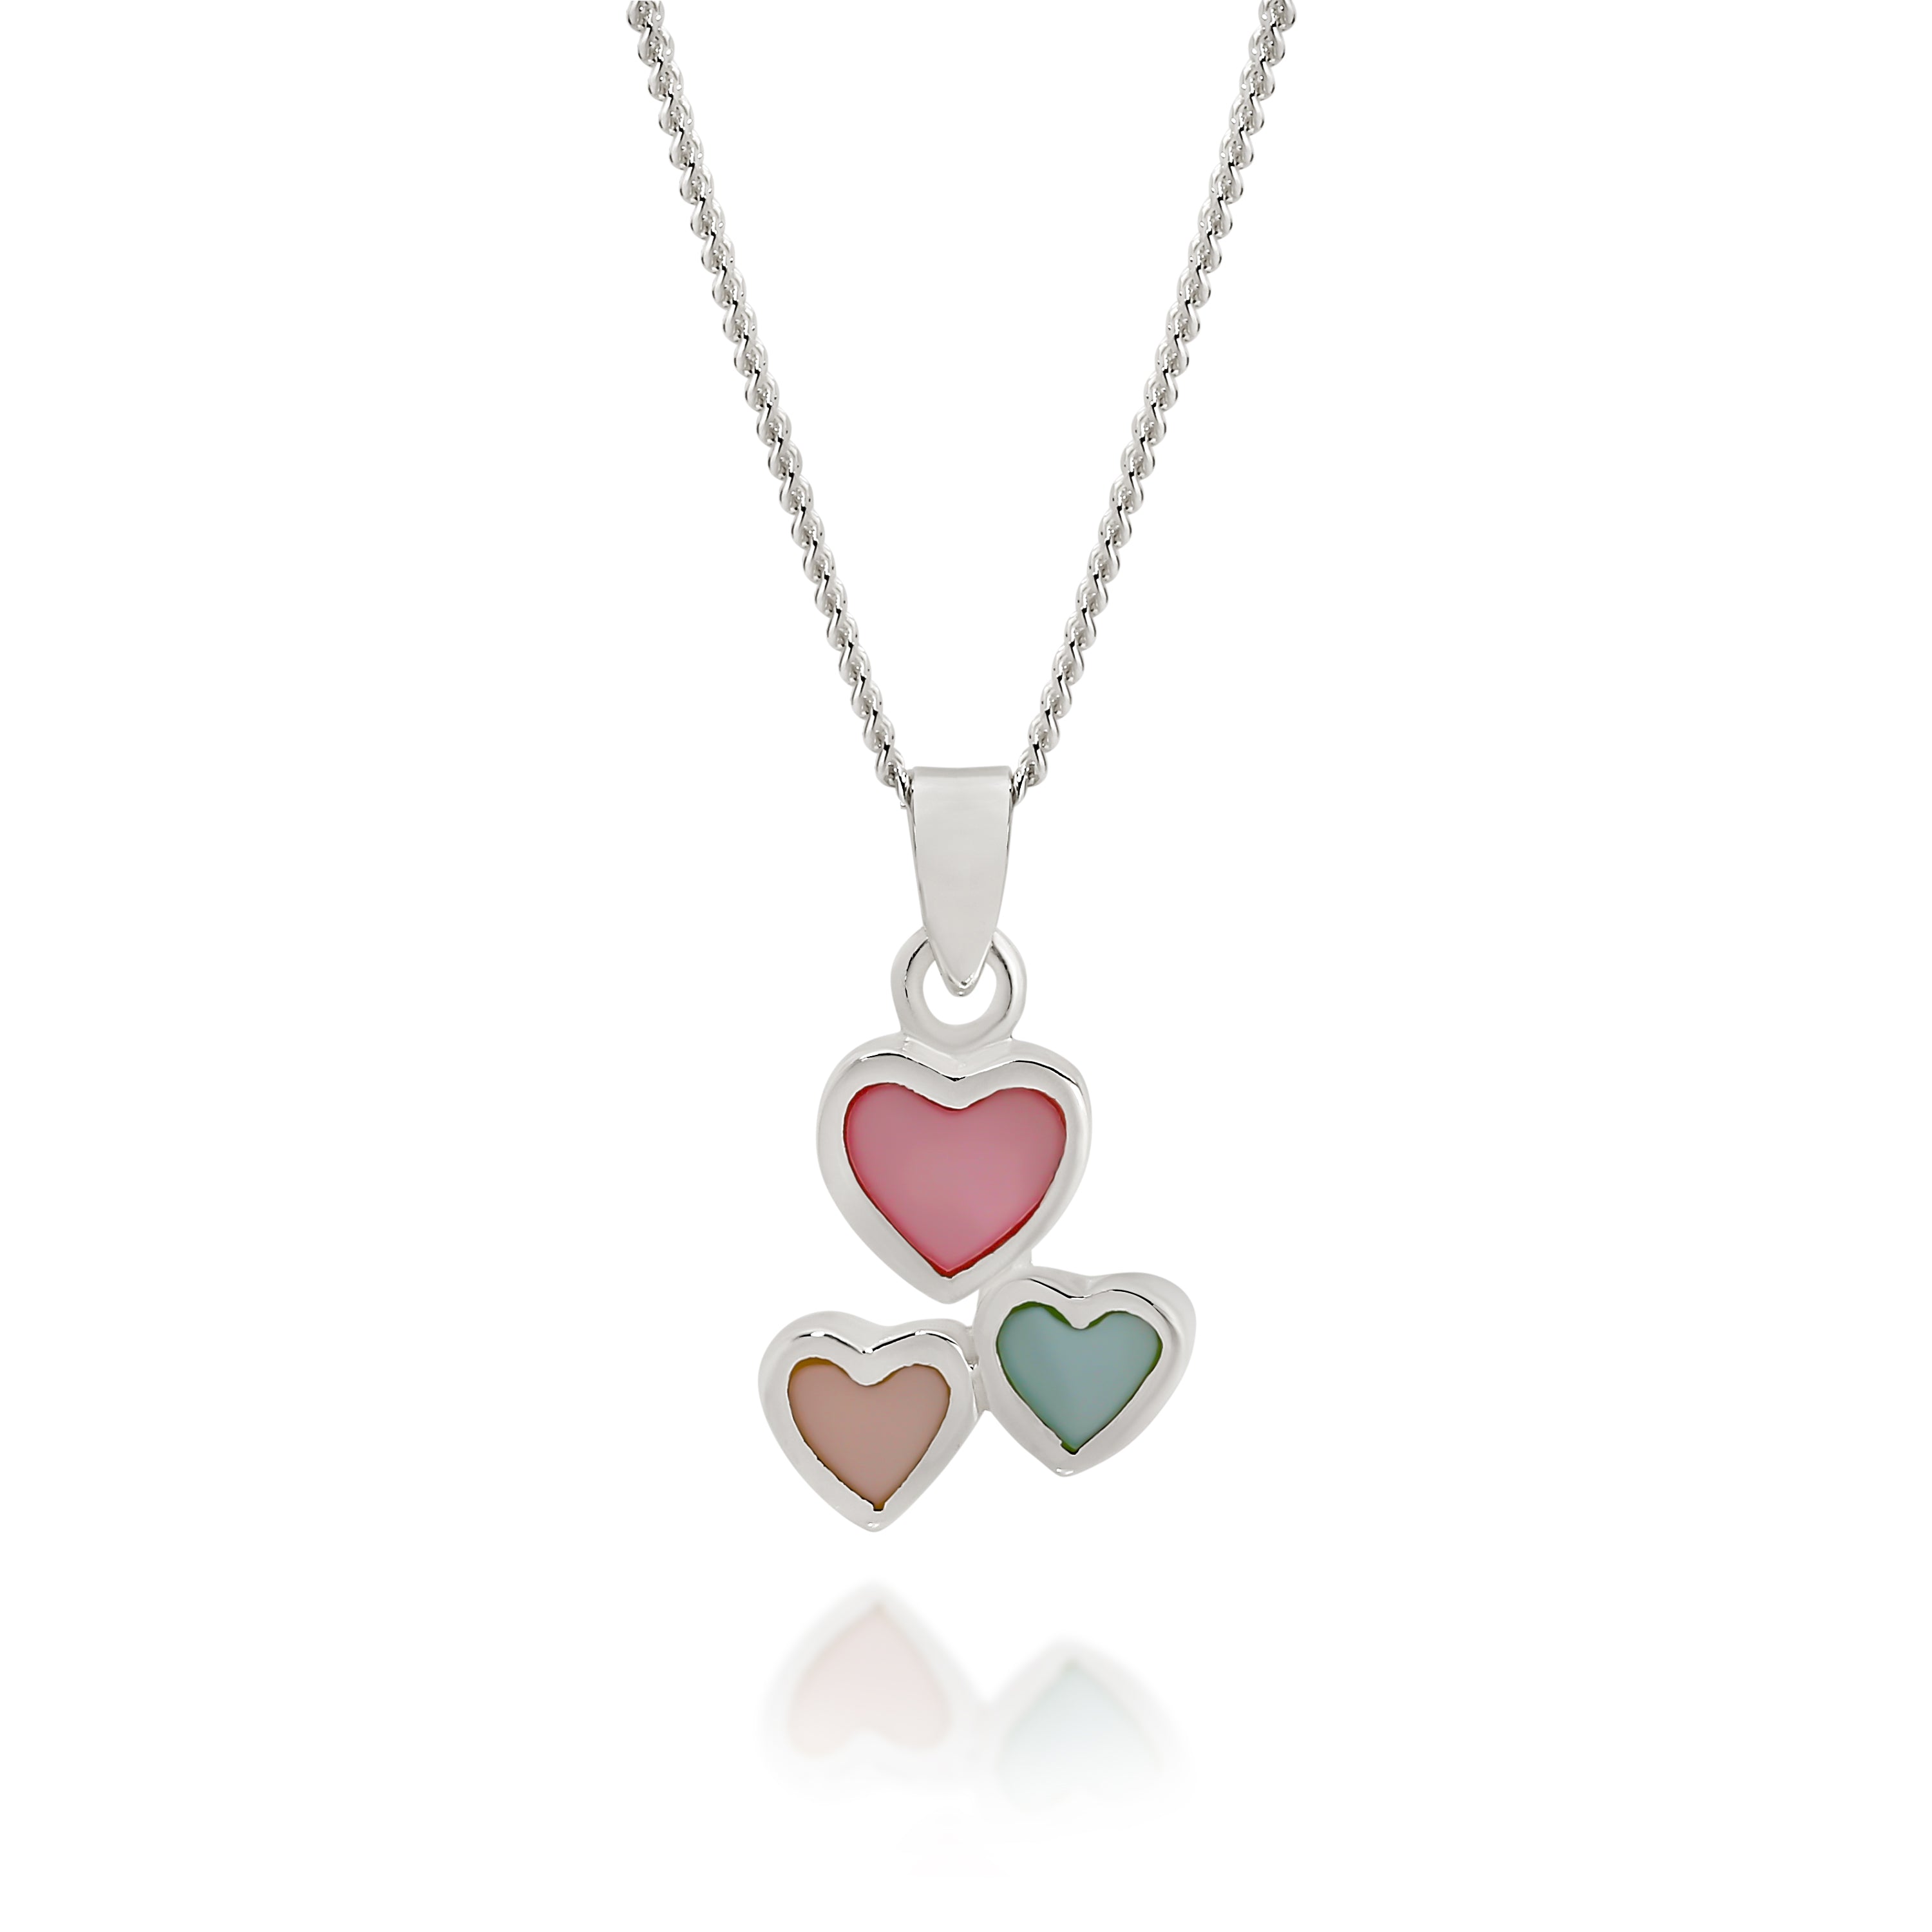 Silver rainbow heart pendant